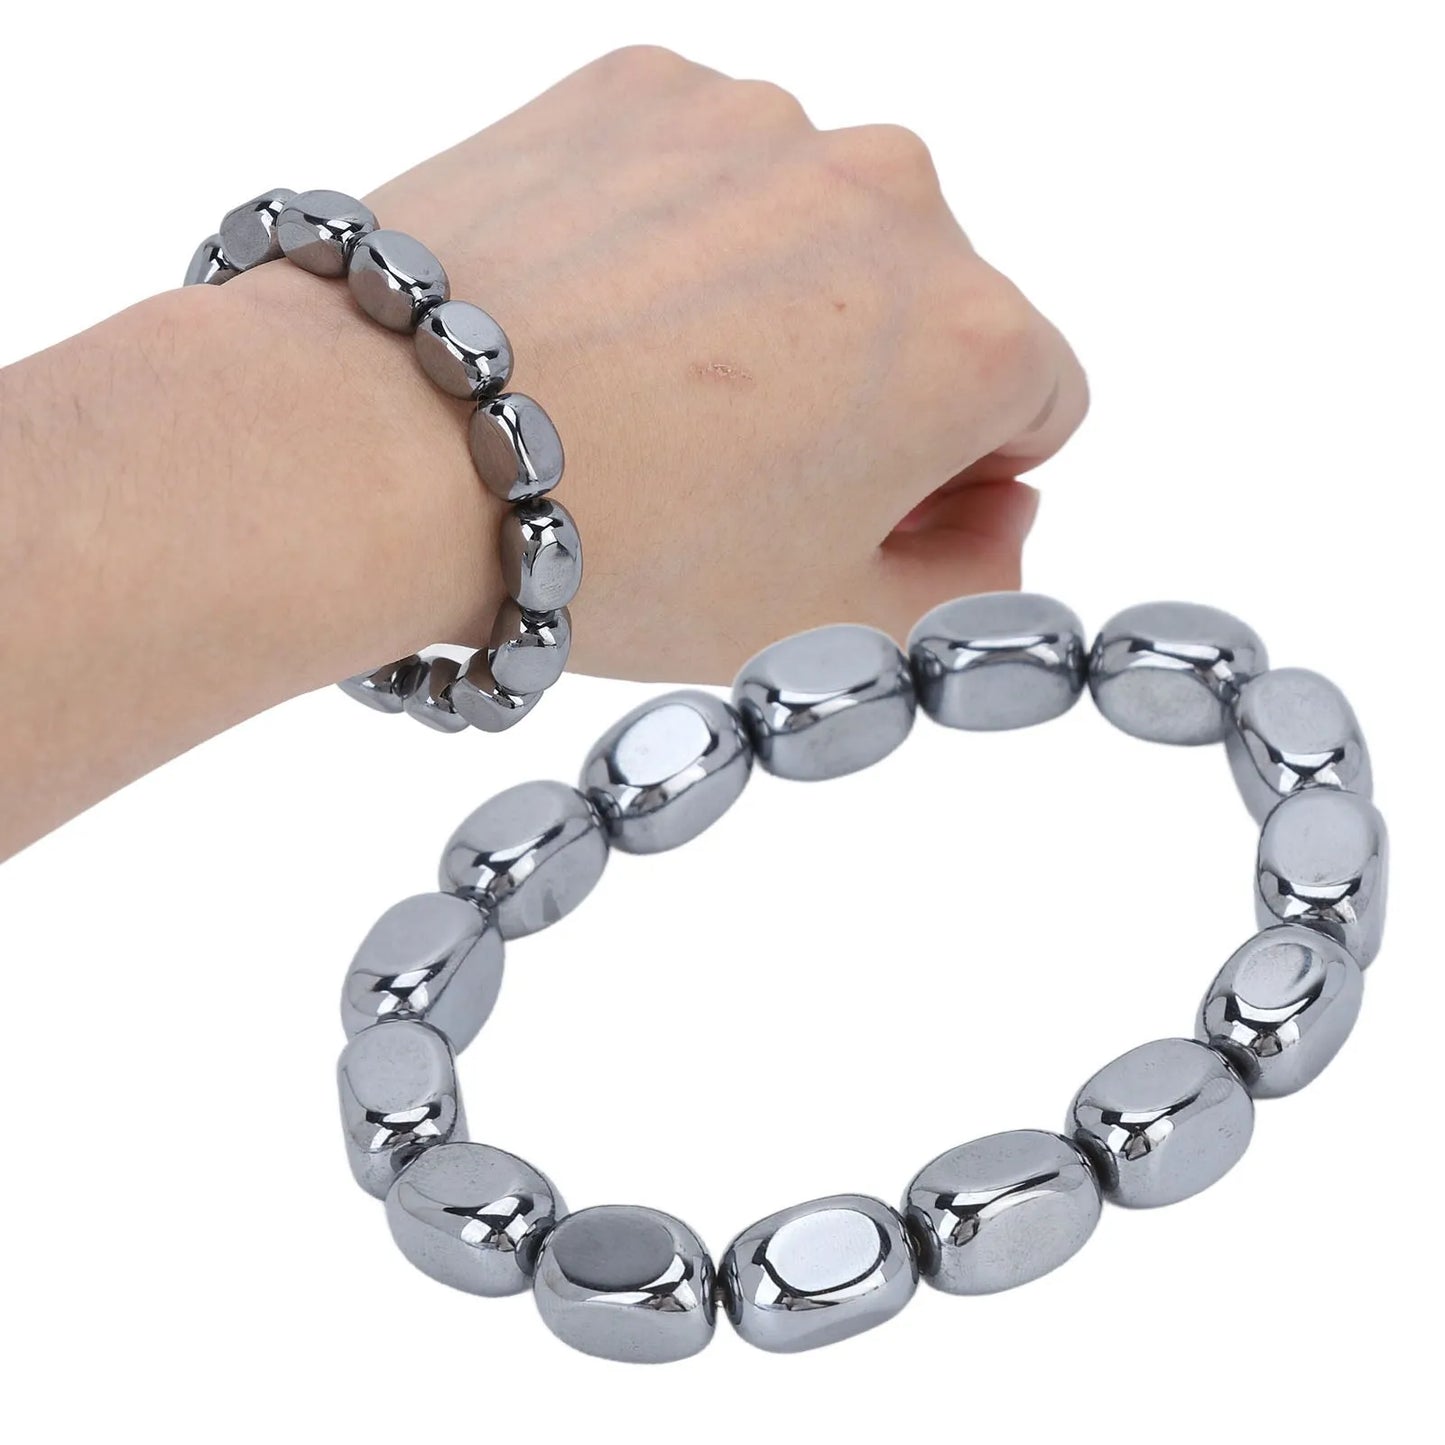 Terahertz Bracelet with elastic band